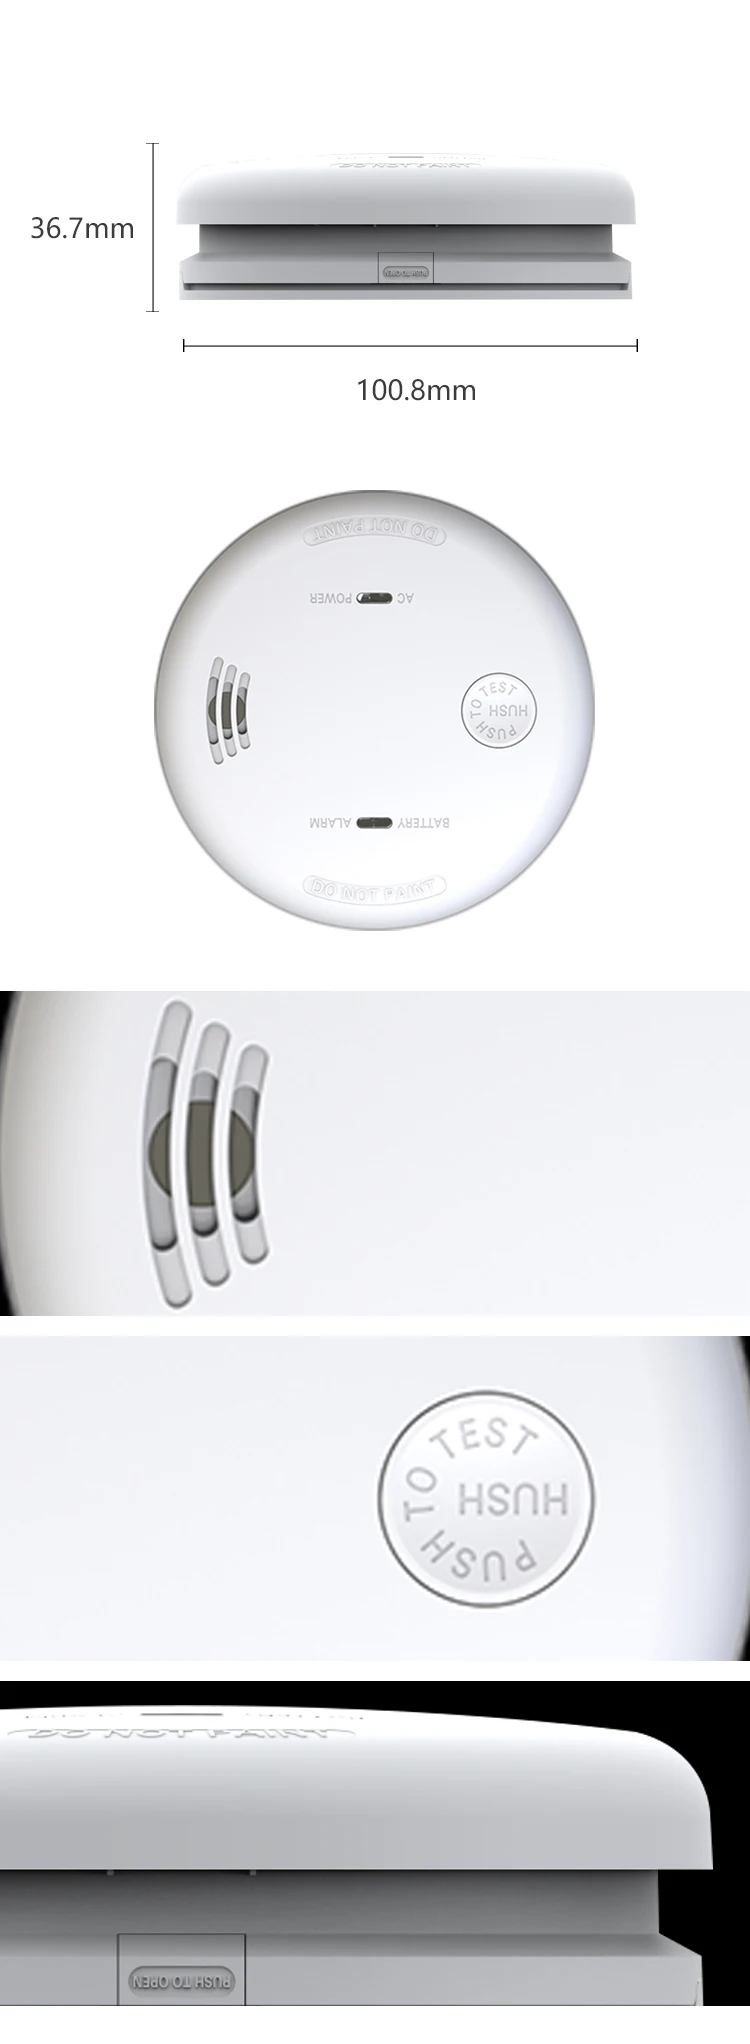 Interlink Mains Smoke Detector Alarm Sensor Home Sicherheit 9v Batterie Backup 